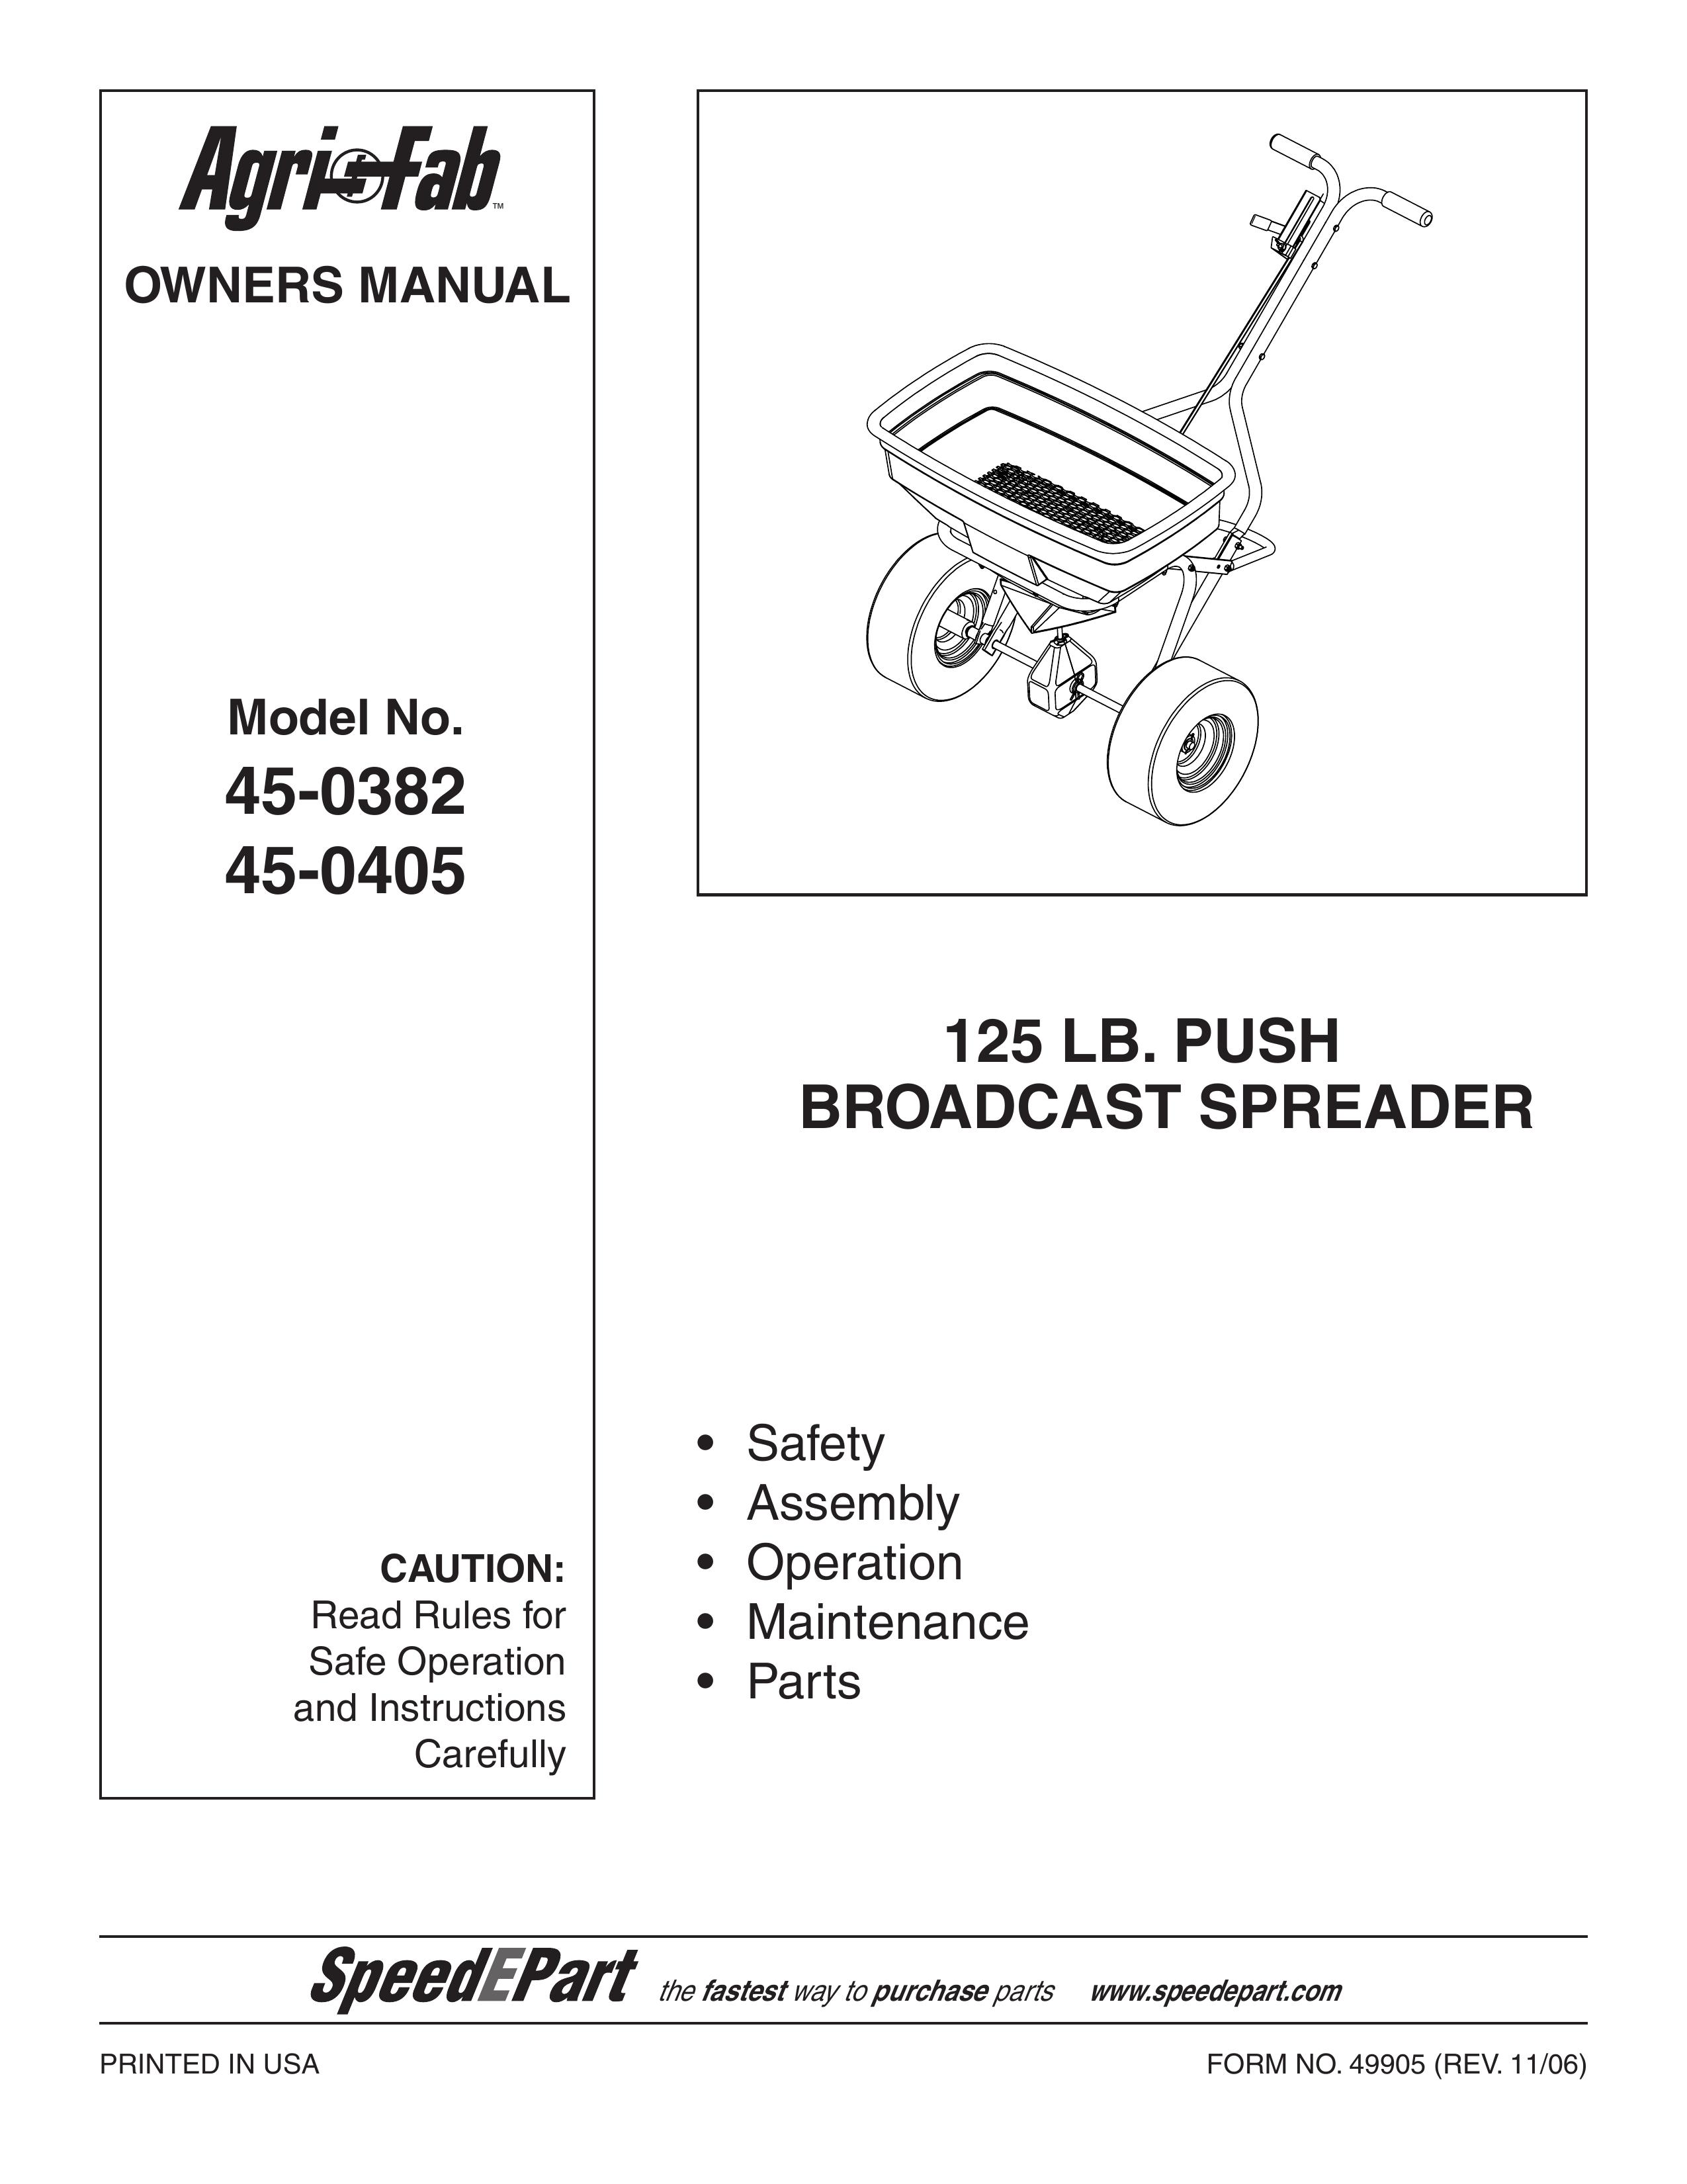 Agri-Fab 45-0405 Spreader User Manual